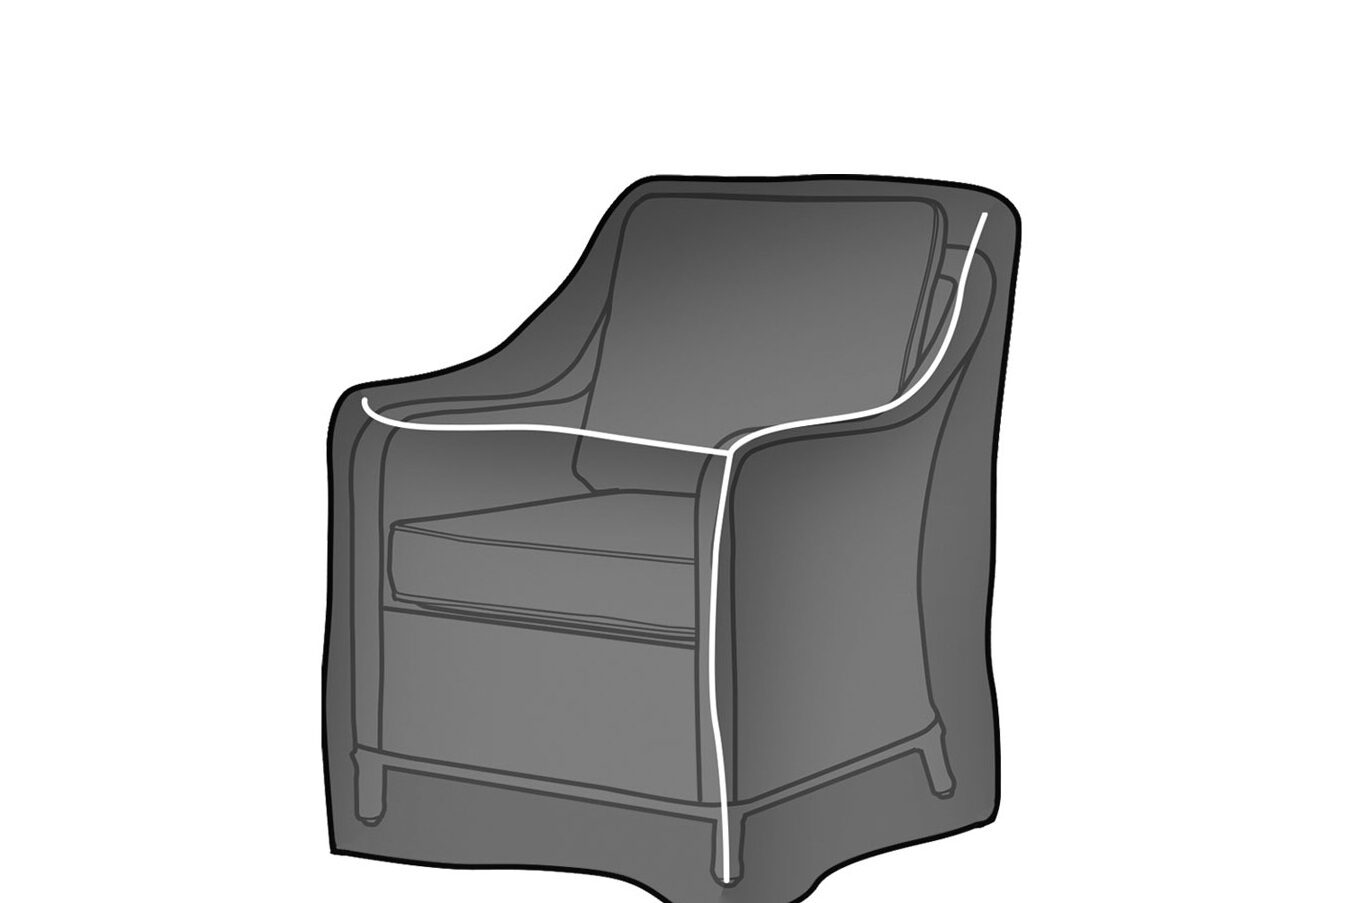 10555 Protective Cover Illu Charlbury Chair 900X900 1